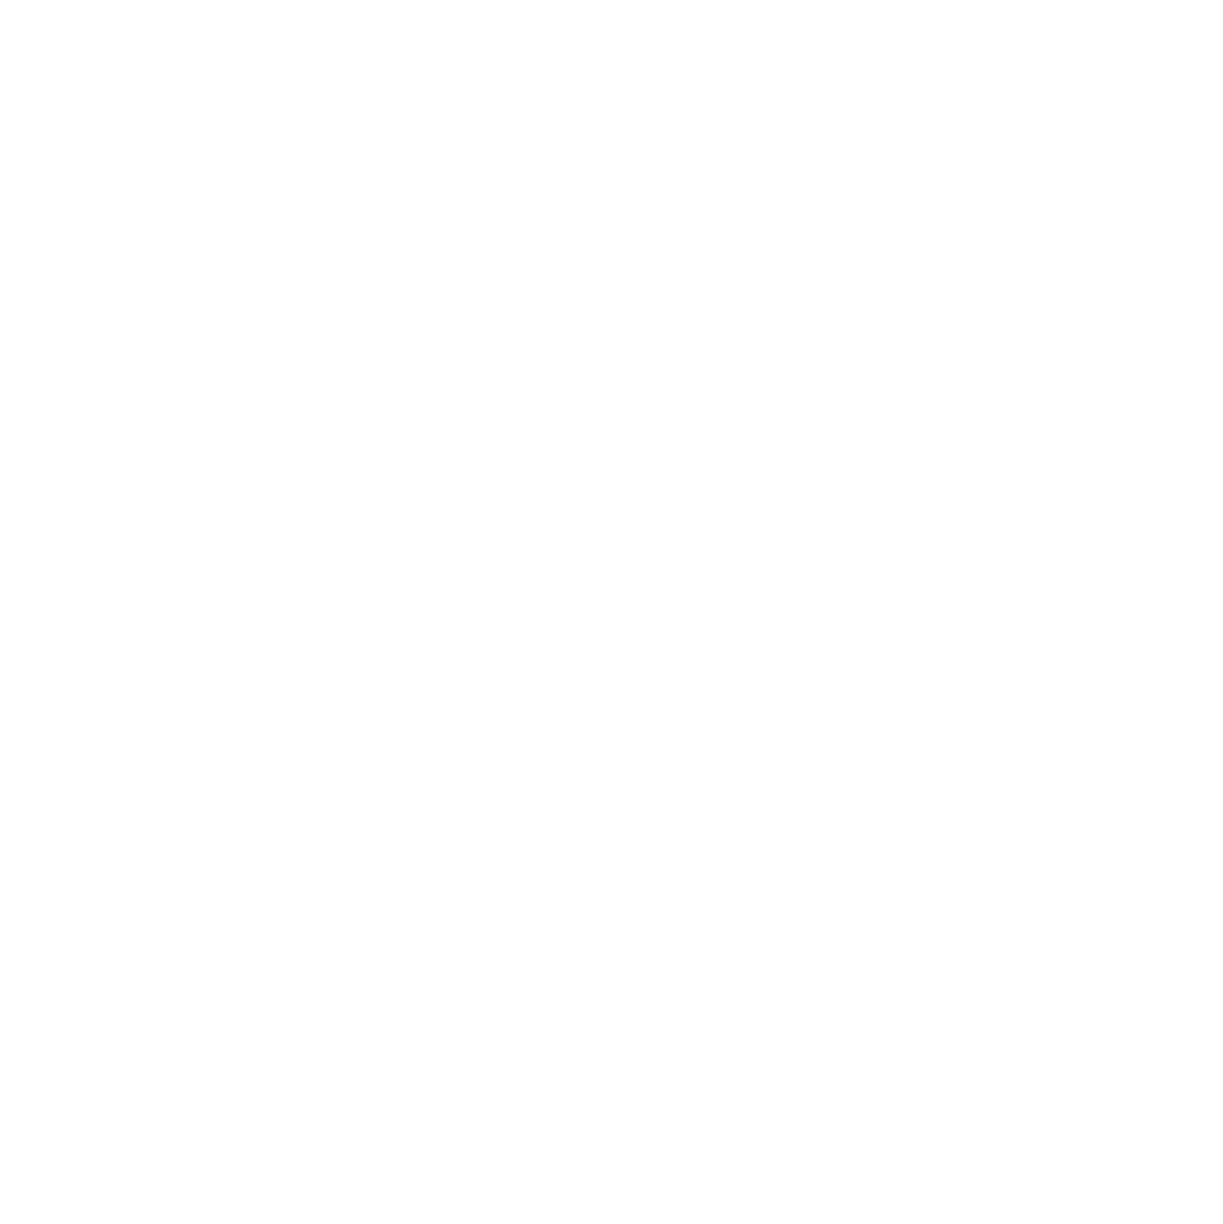 Northern Lakes Capital